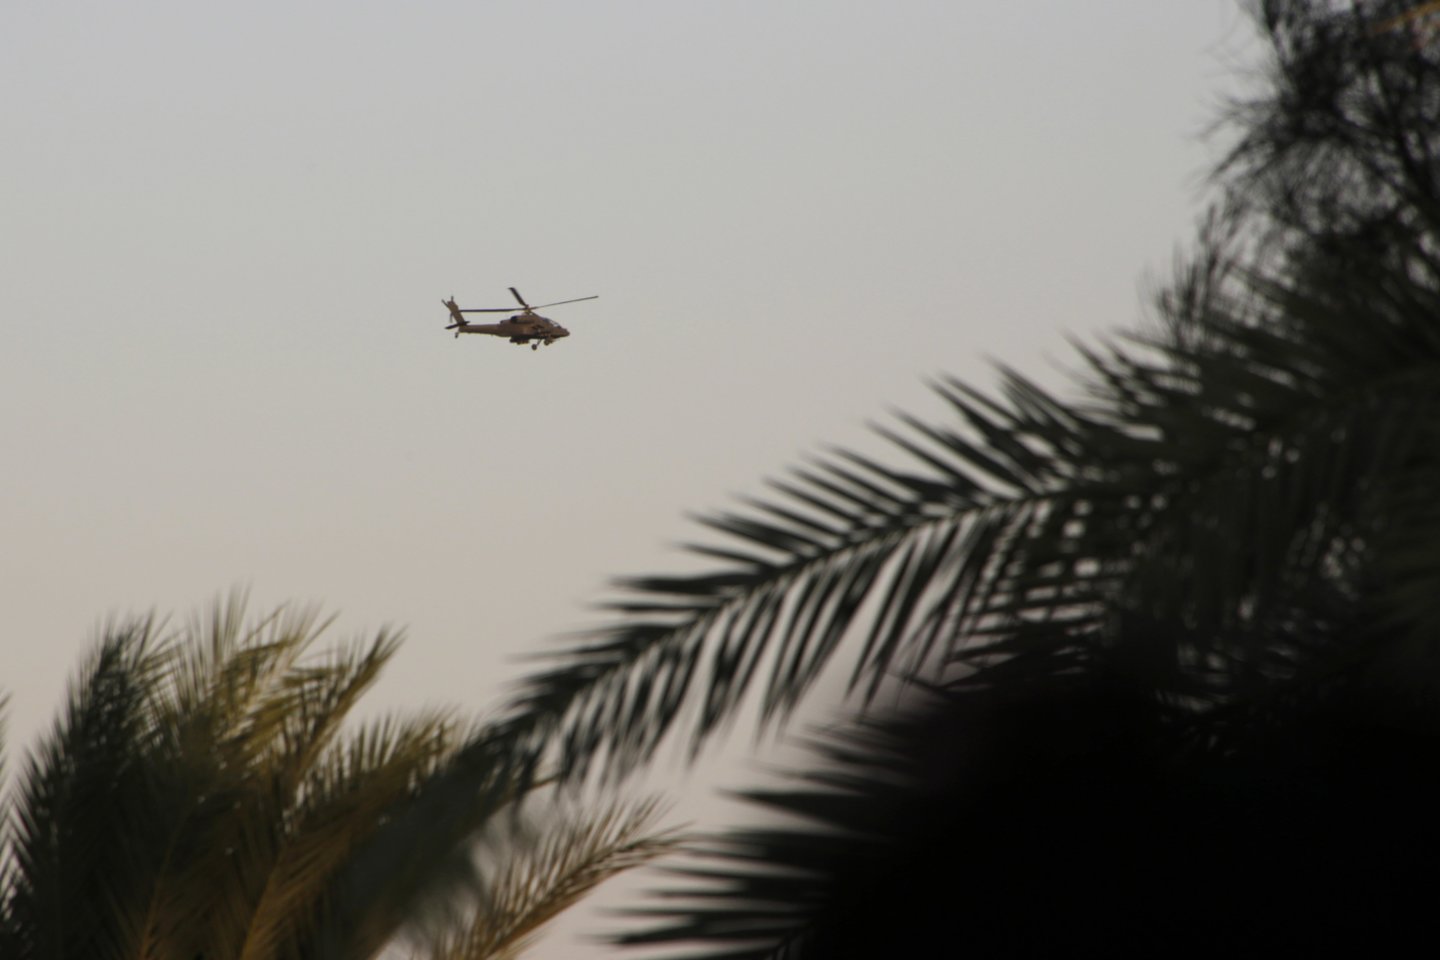  Egipte sudužo sraigtasparnis su 8 žmonių įgula. (asociatyvi nuotr.)<br> AP/Scanpix nuotr.